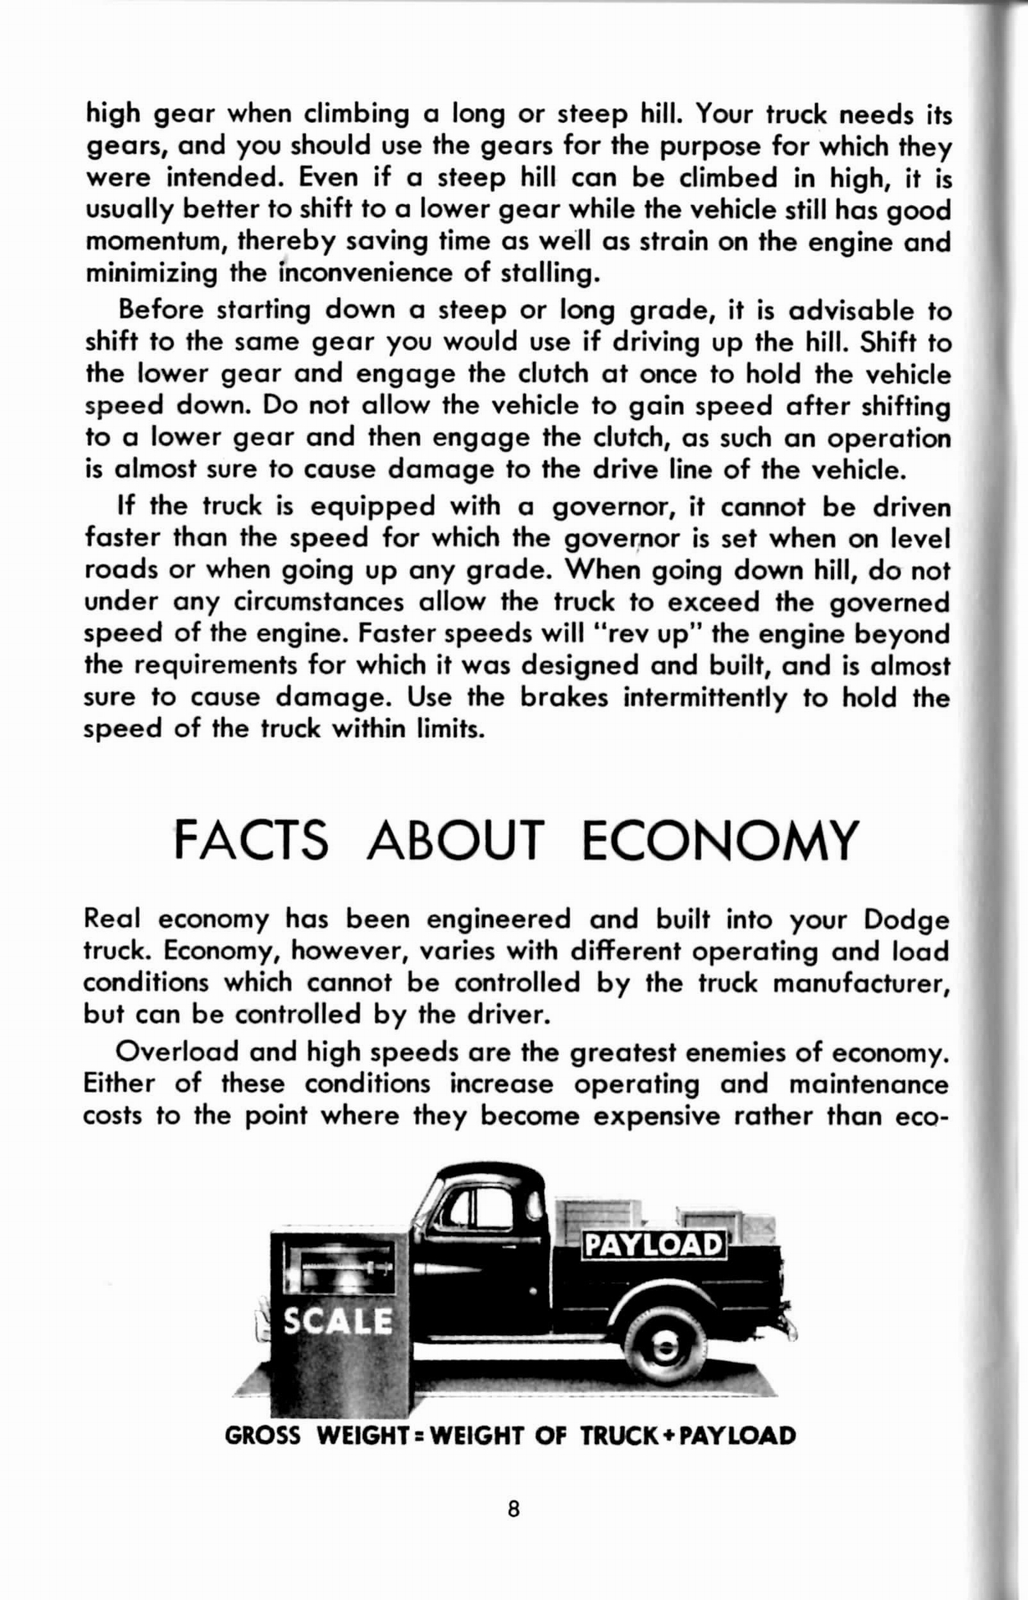 n_1949 Dodge Truck Manual-10.jpg